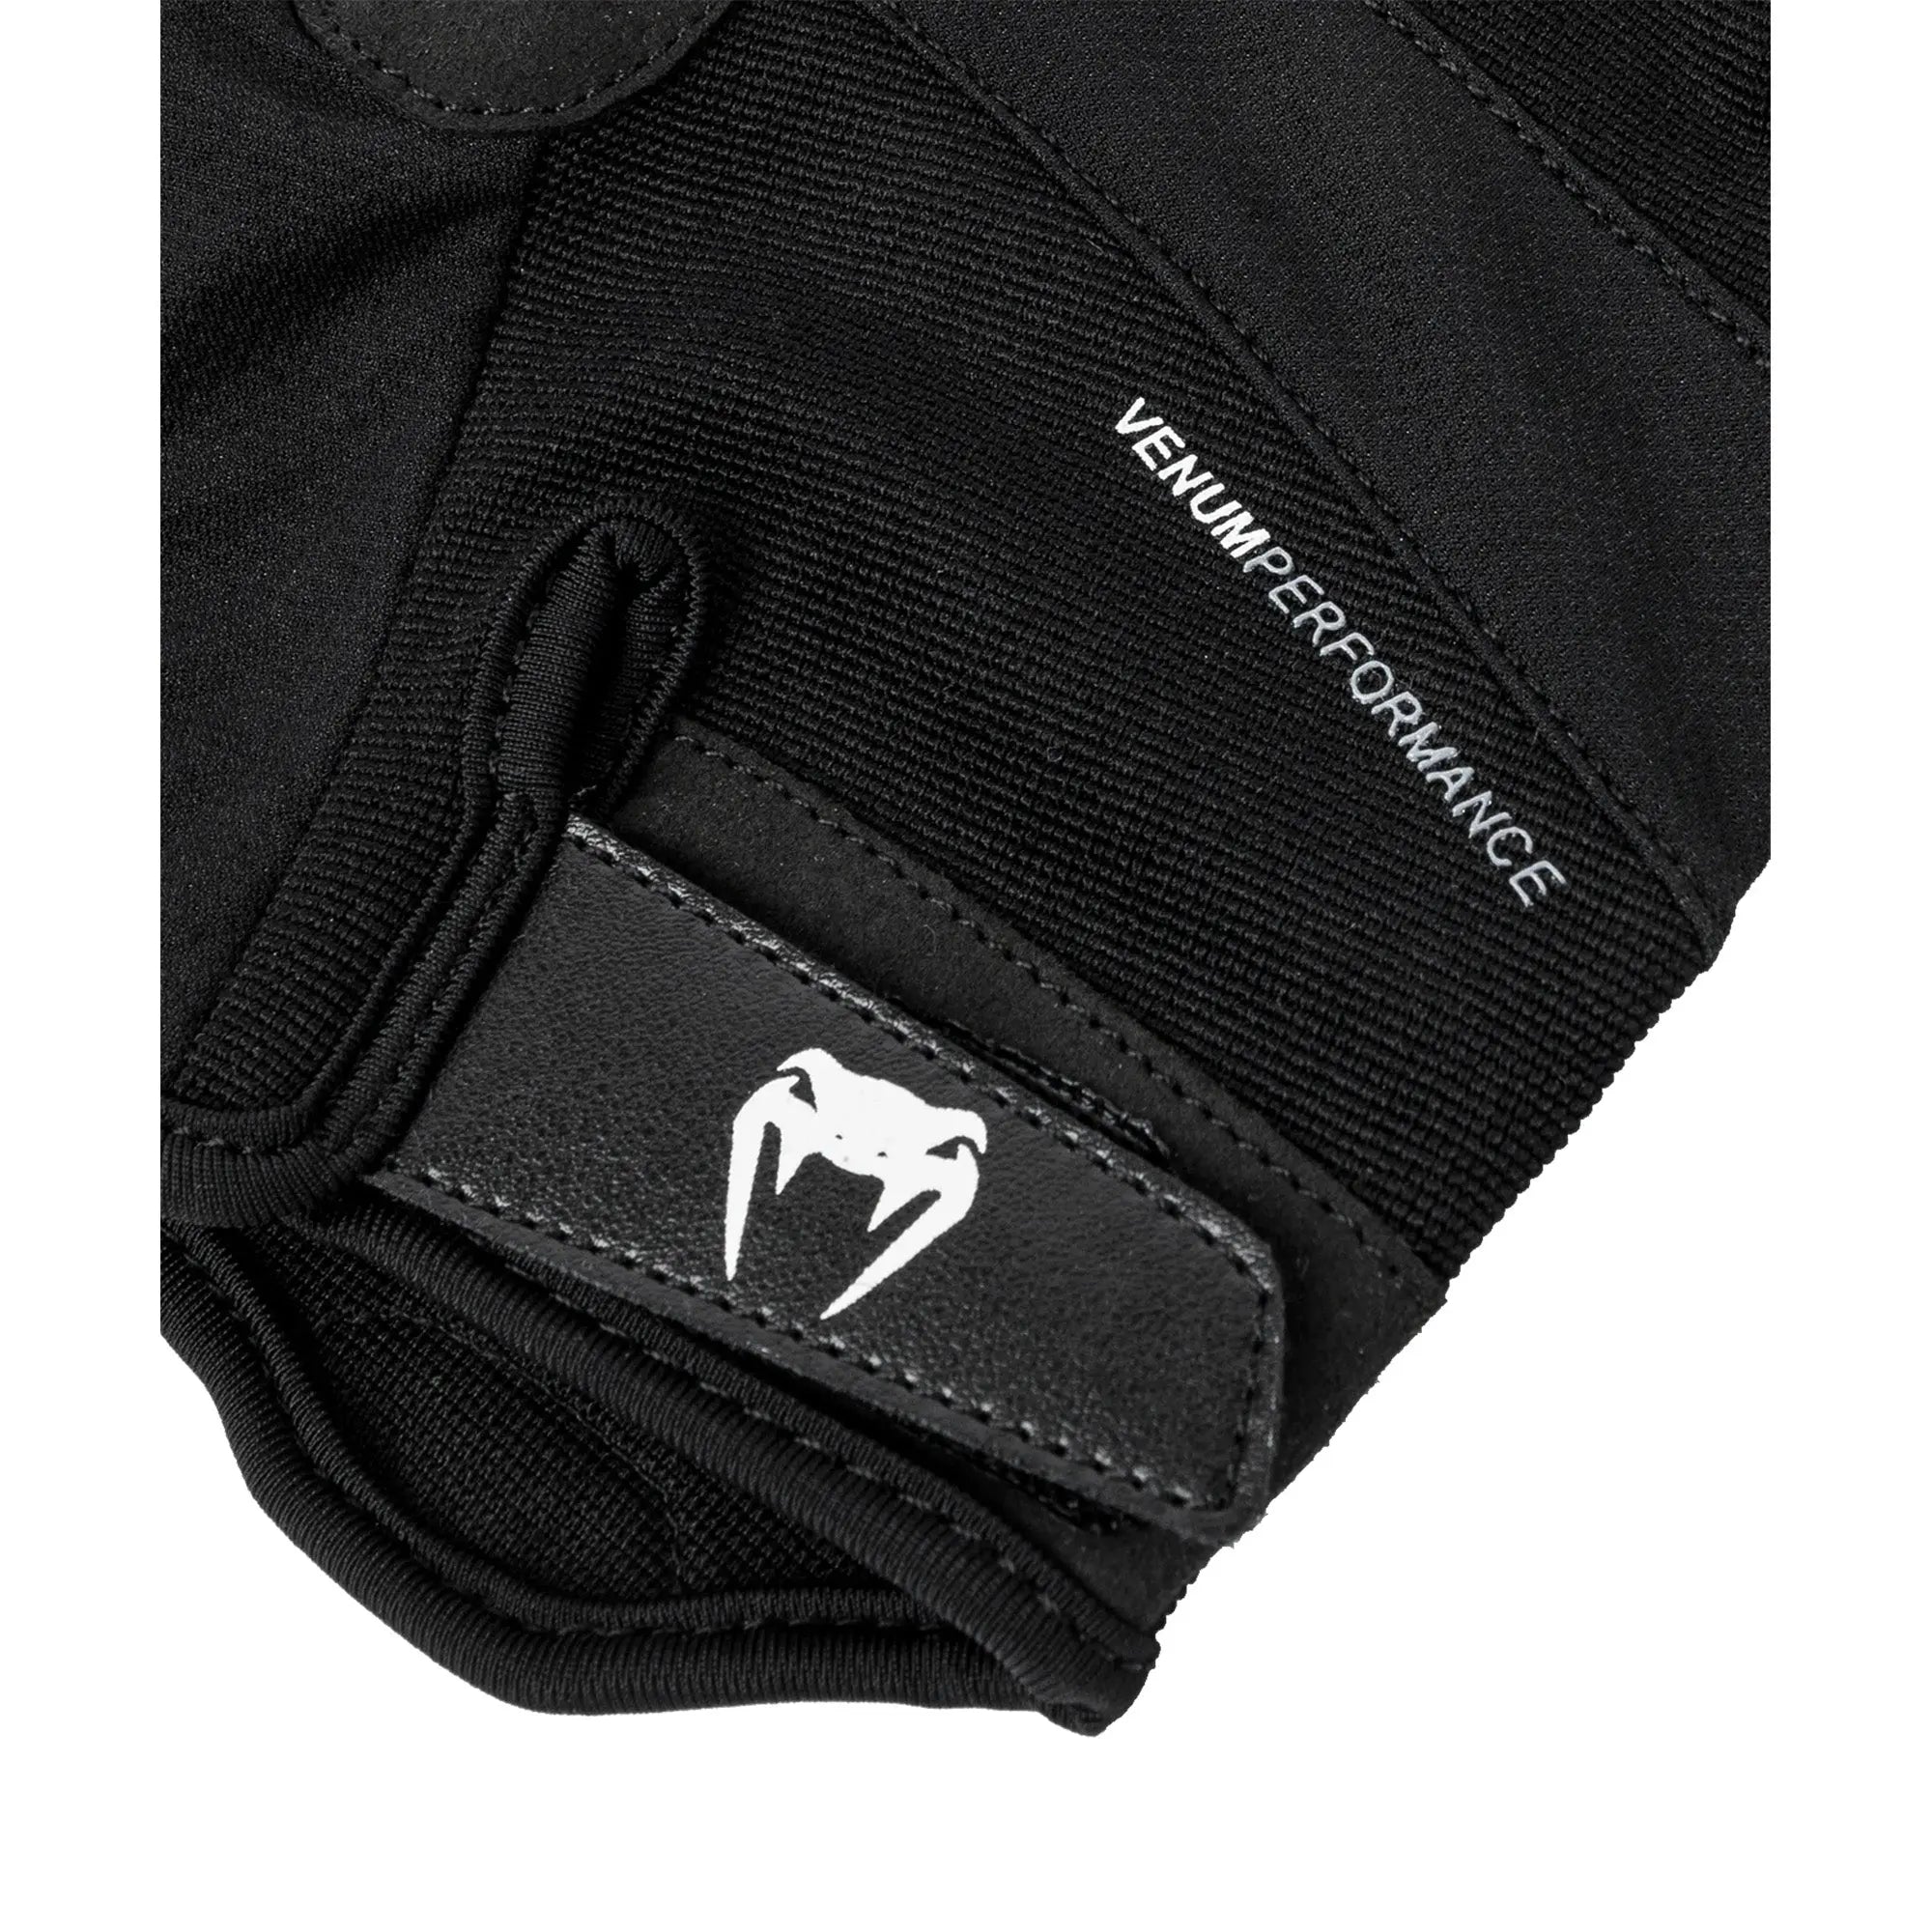 Venum Hyperlift 2.0 Weight Lifting Gloves - Black Venum